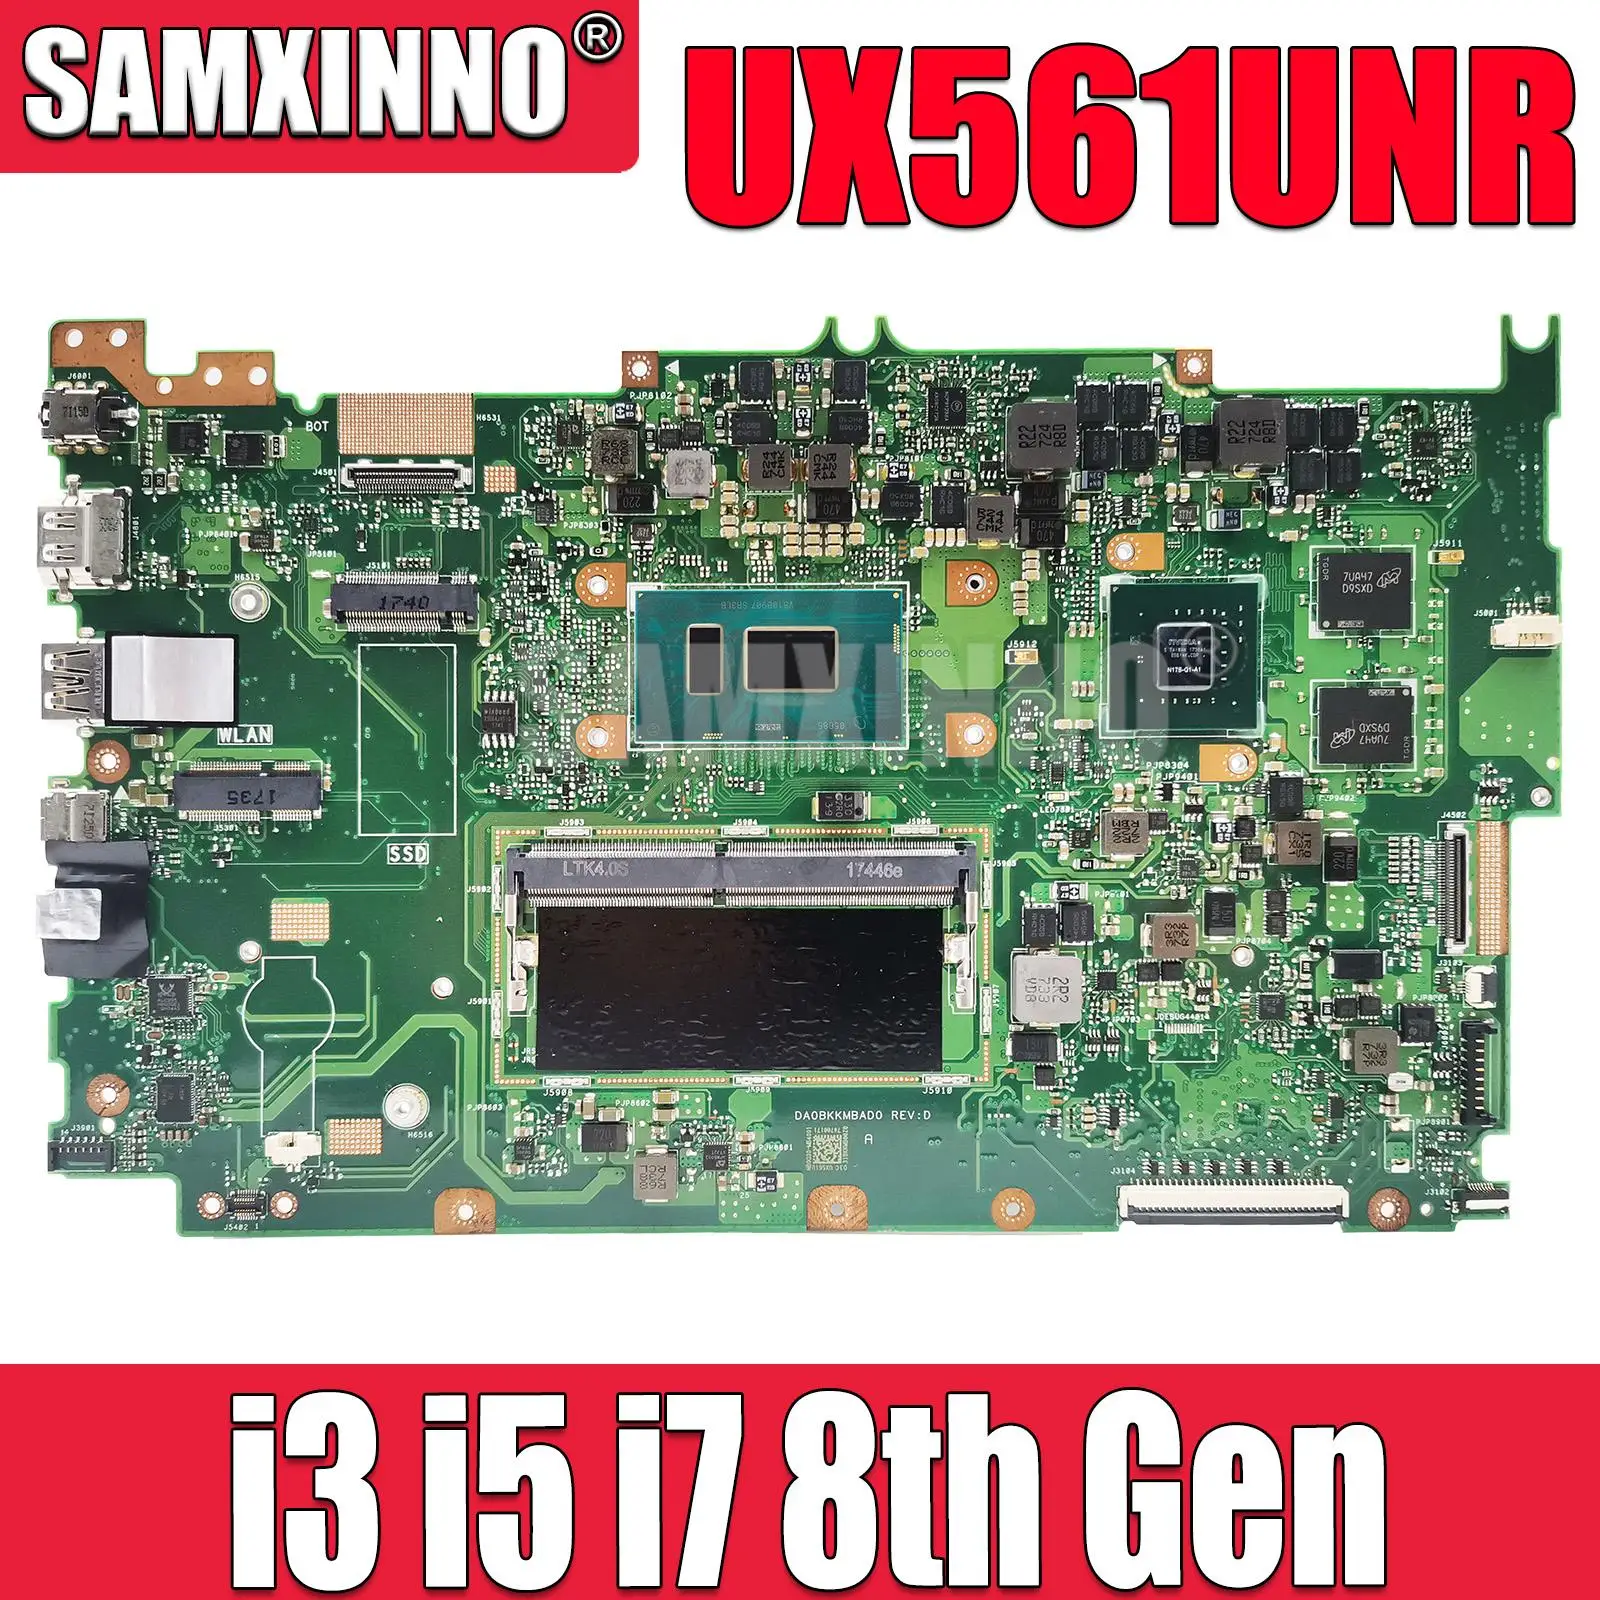 

UX561UAR Mainboard For ZenBook Flip UX561UNR UX561UA UX561UN Q525UAR UX561 Laotop Motherboard I7-8550U I5-8250U I3-8130U 8G RAM